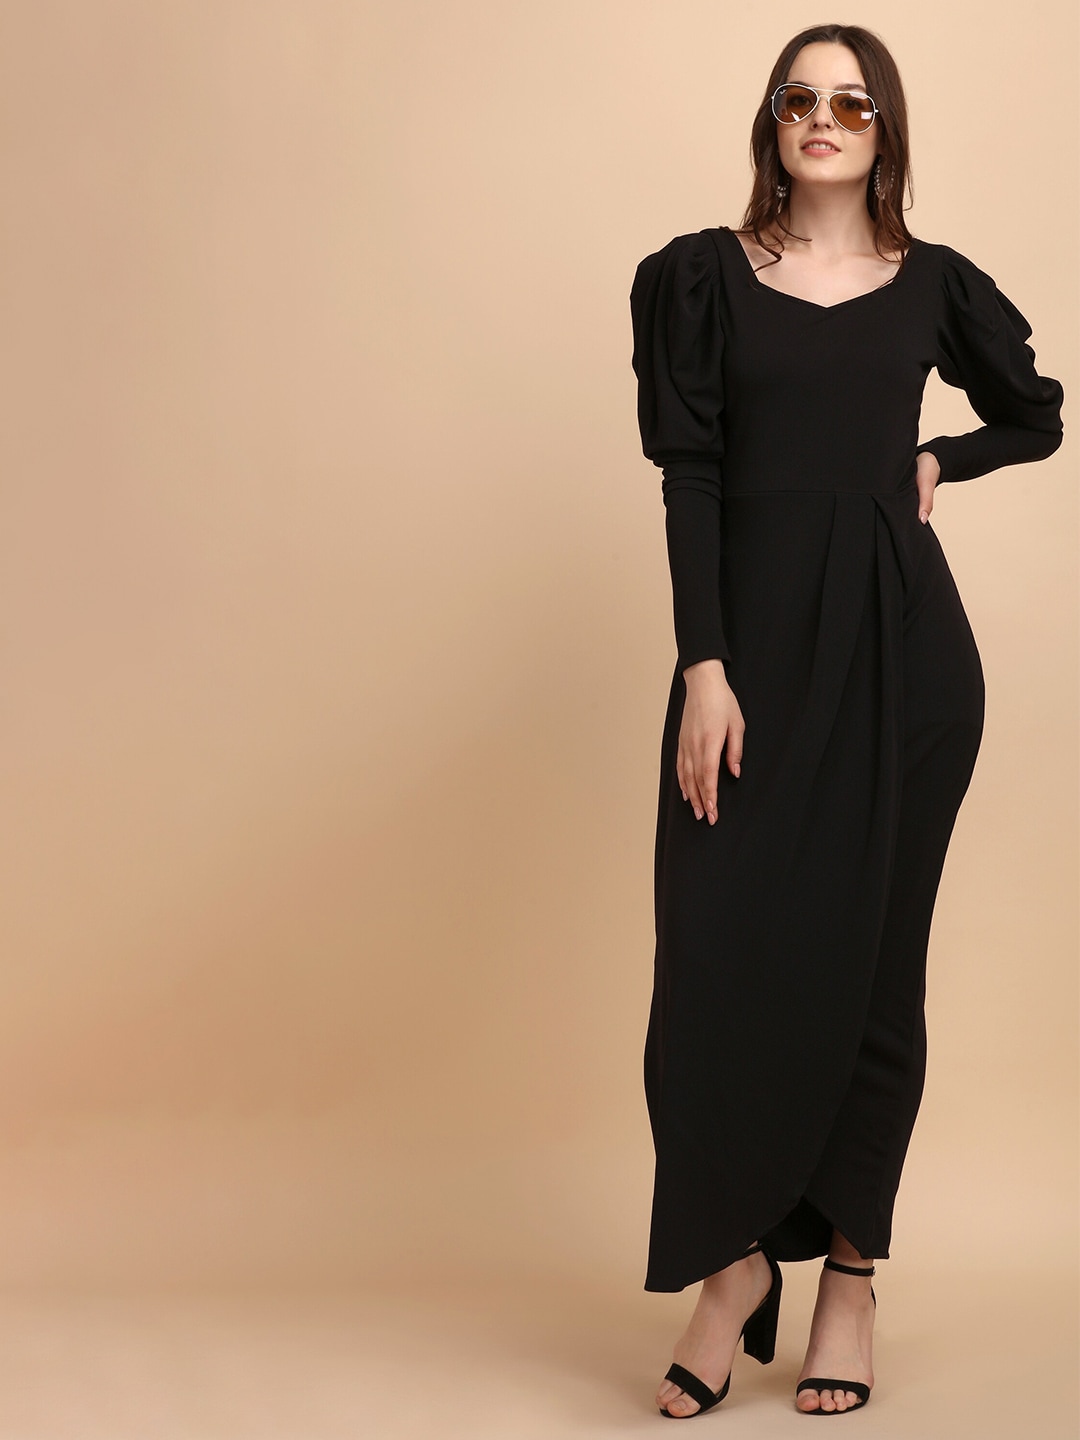 SHEETAL Associates Black Maxi Dress Price in India